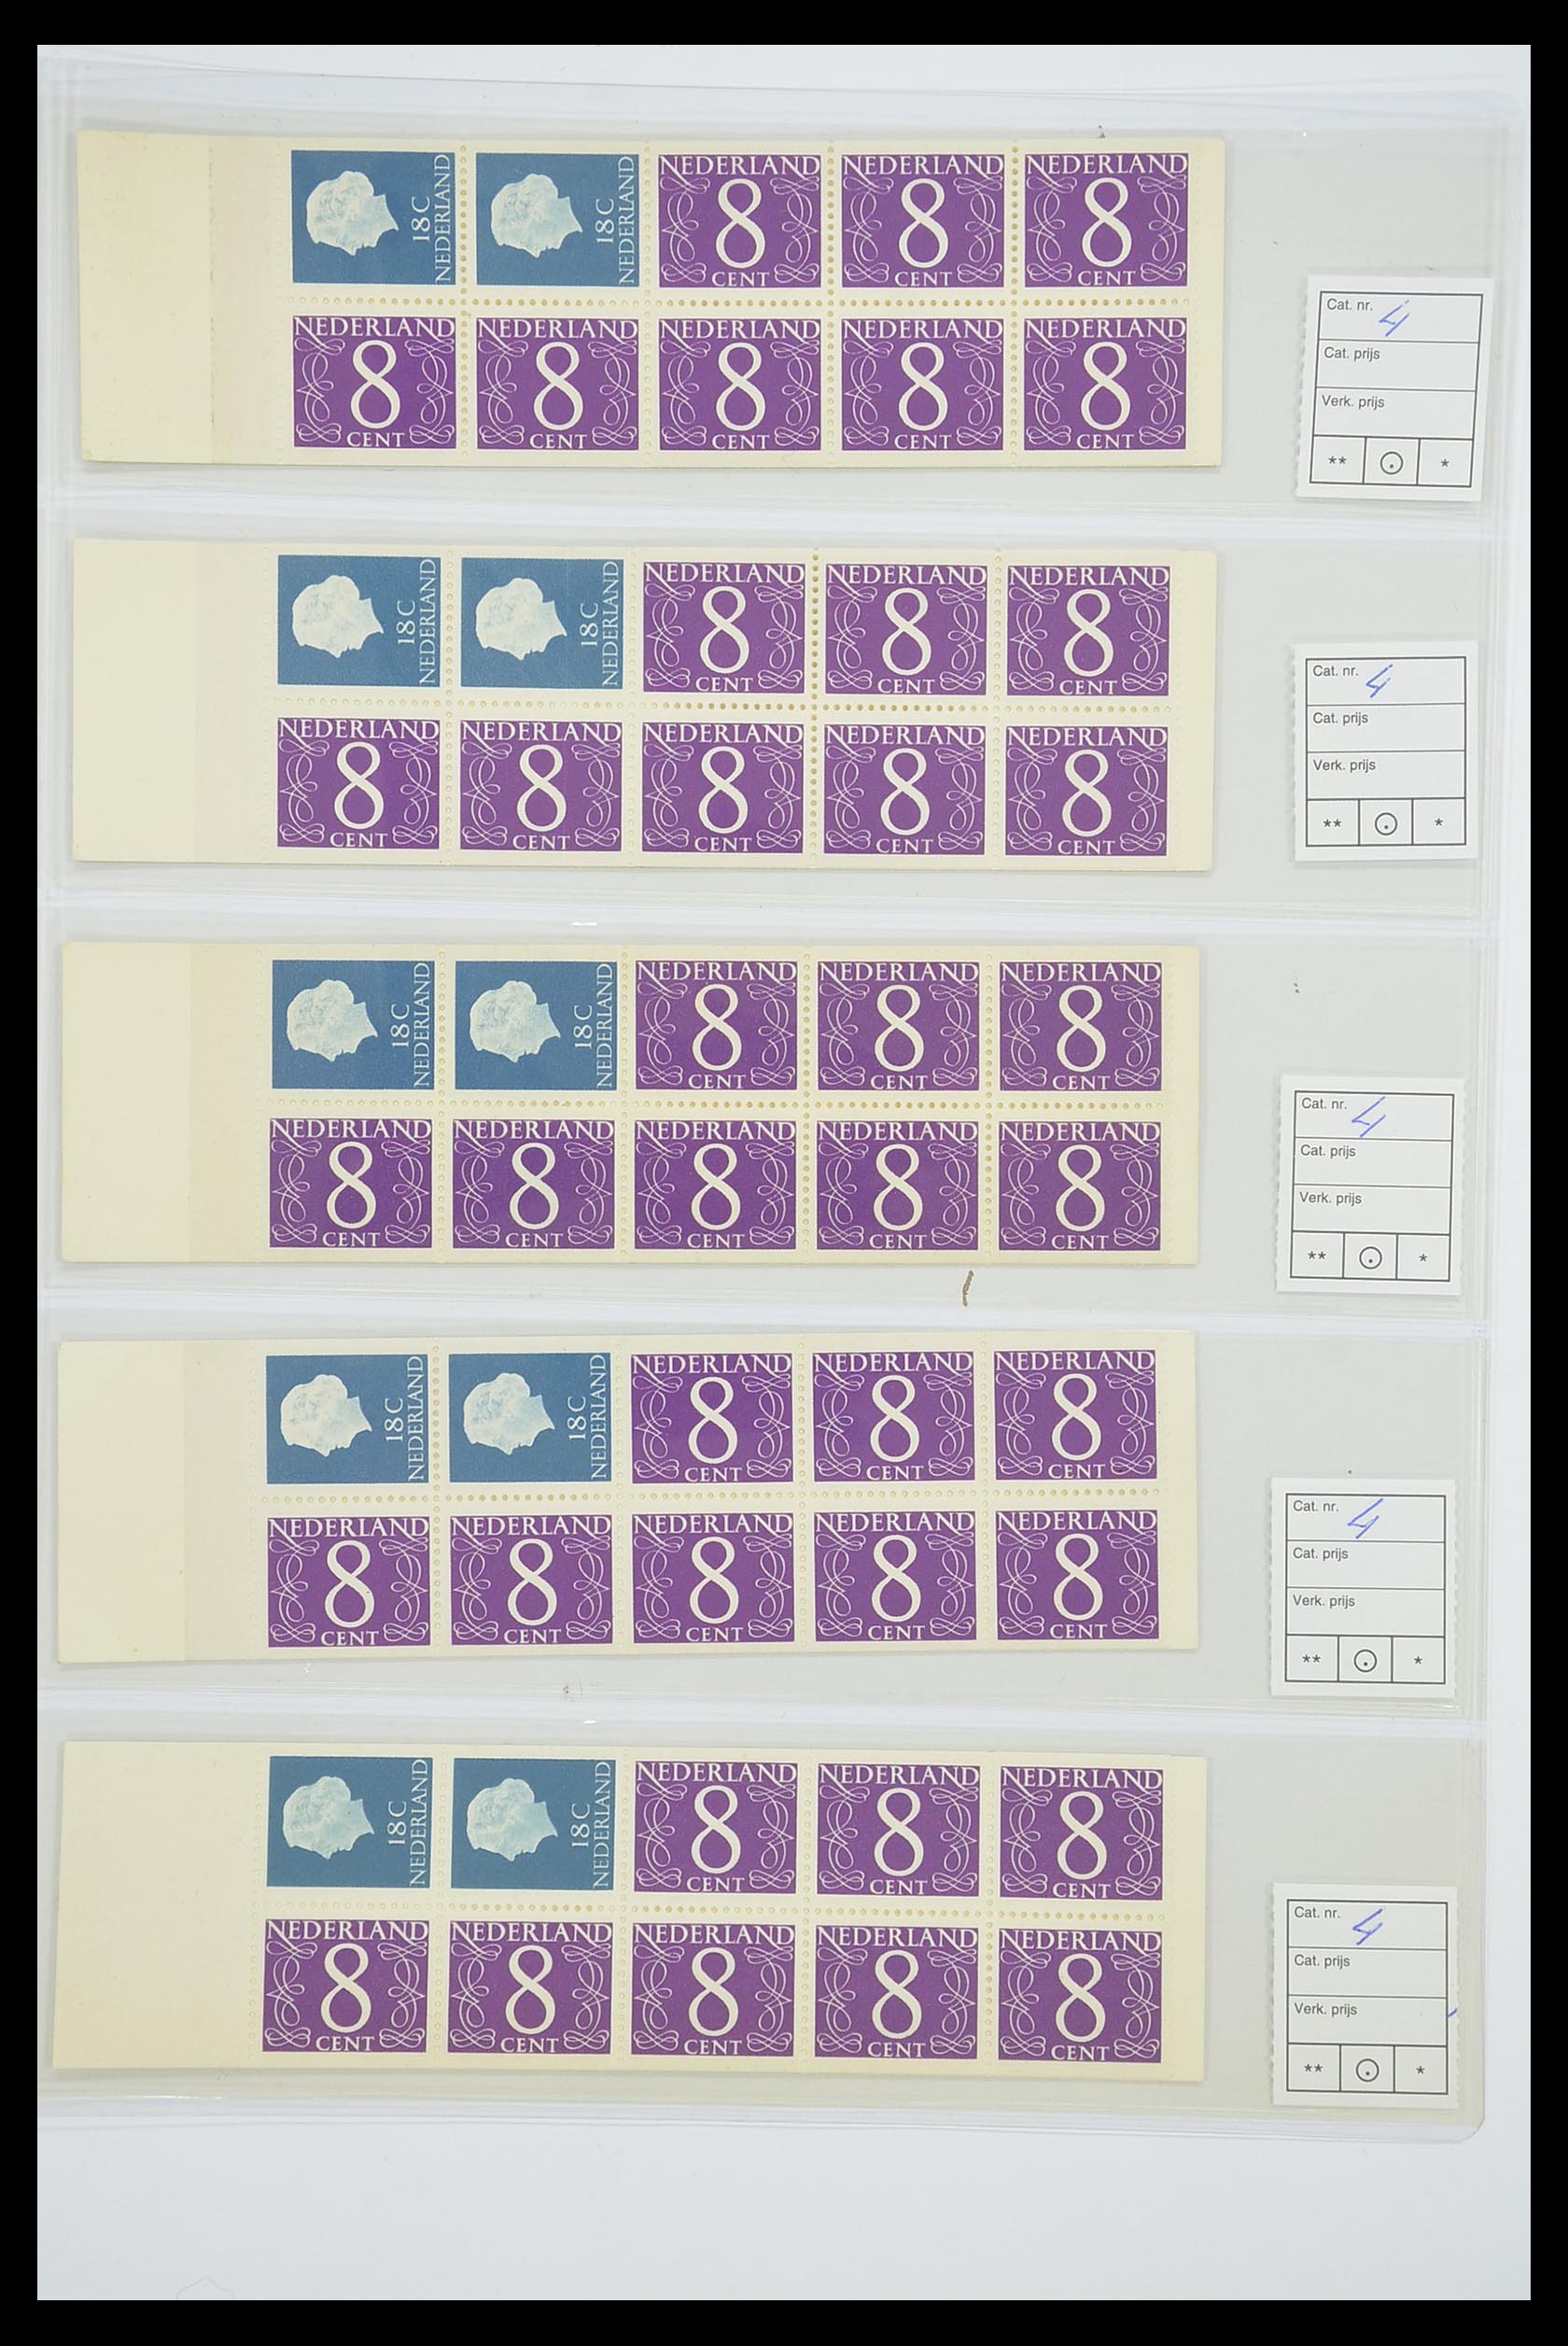 33815 017 - Stamp collection 33815 Netherlands stamp booklets 1964-2001.